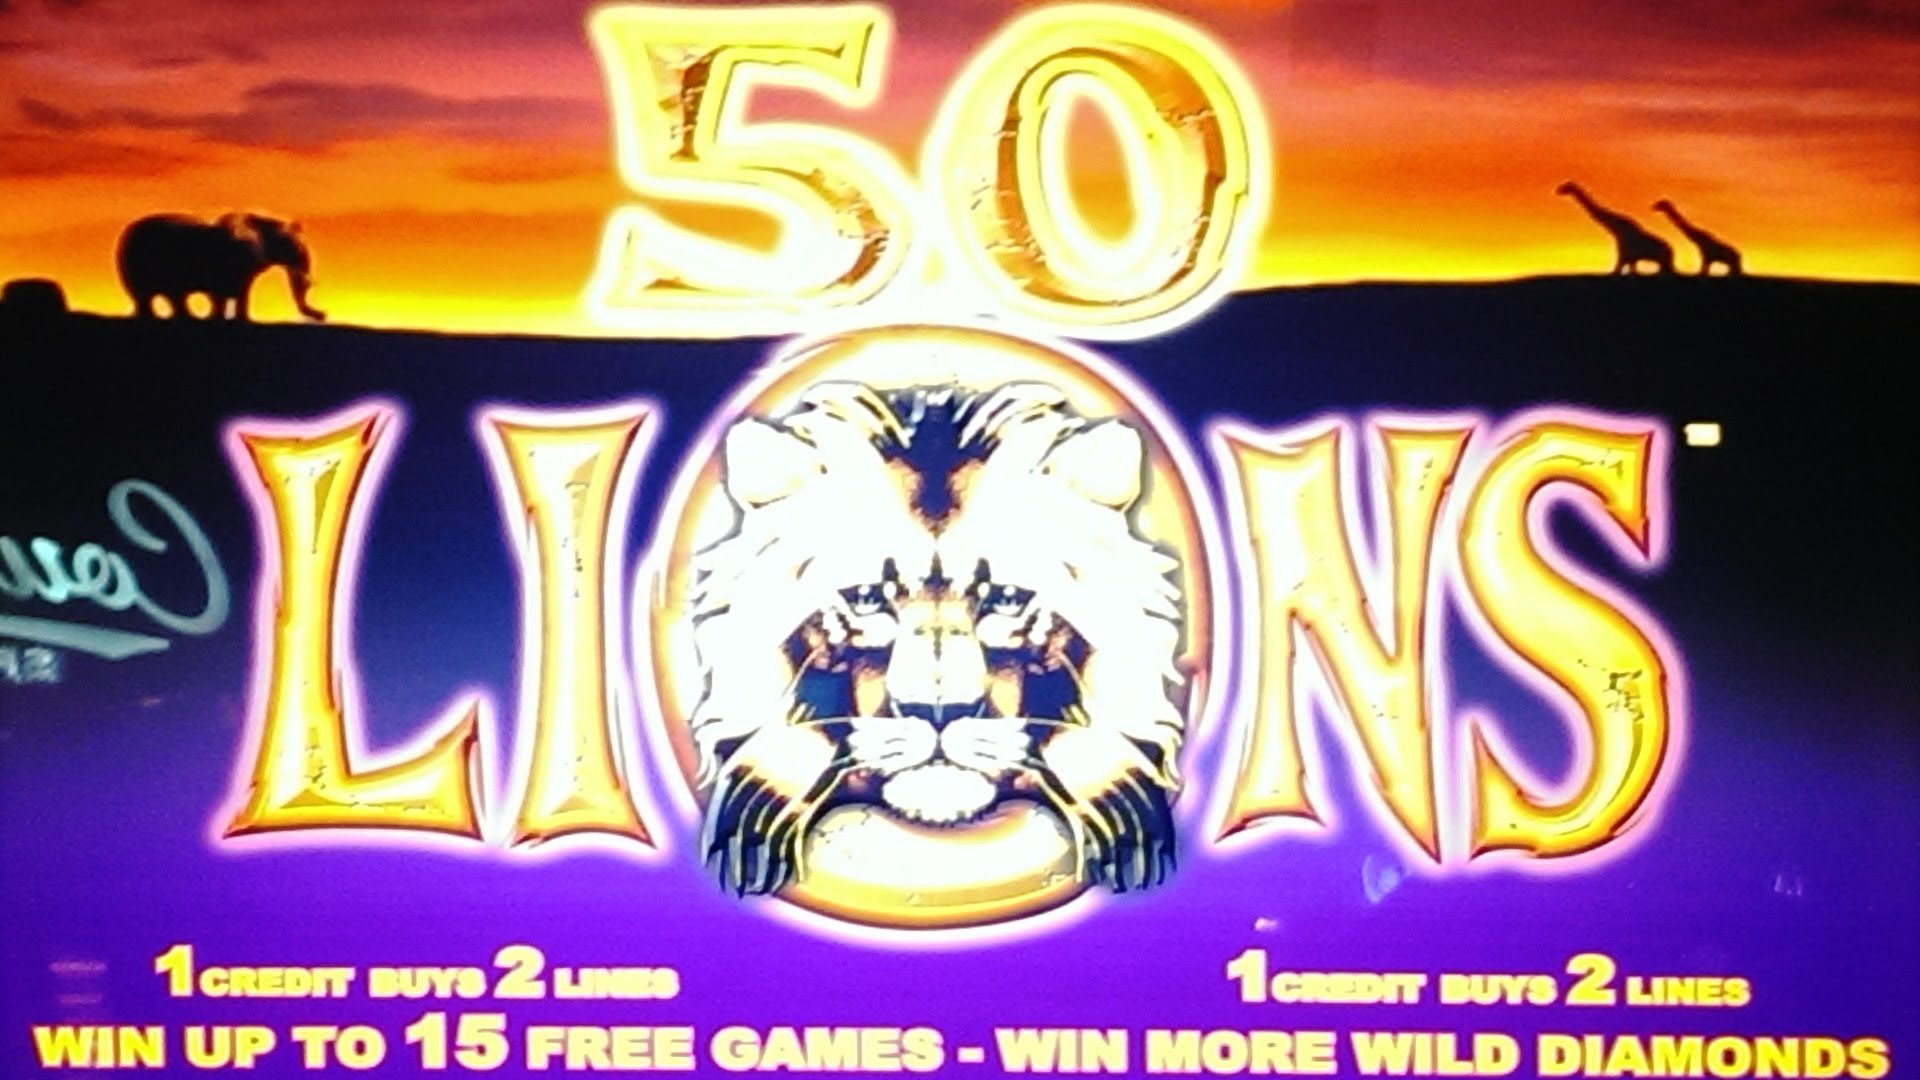 50 Lions #3